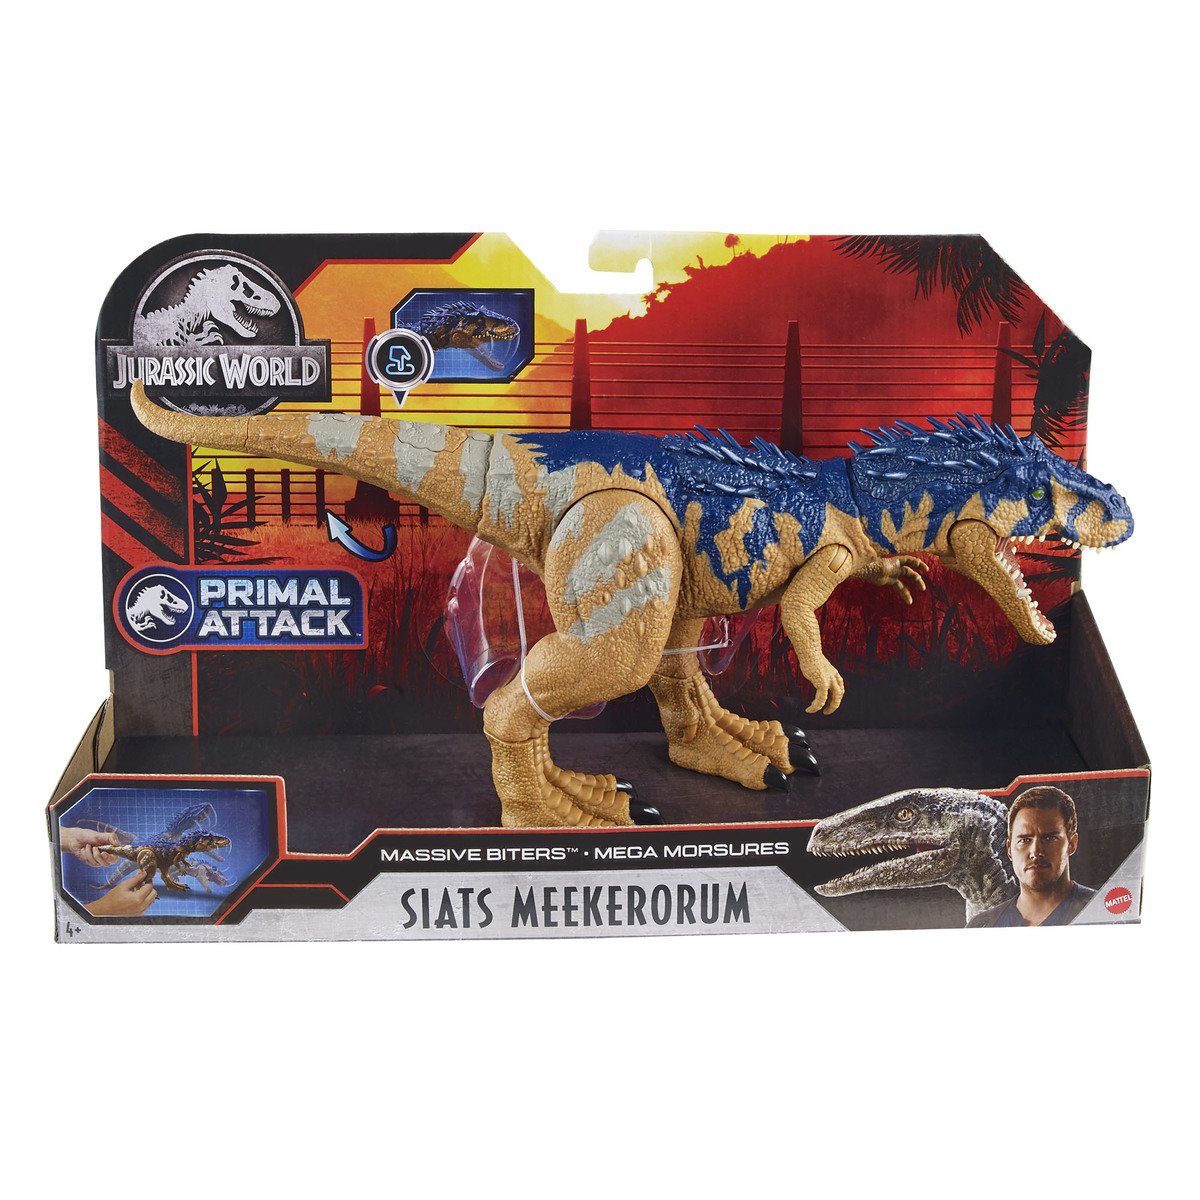  Jurassic World Massive Biters Figure - Siats Meekerorum